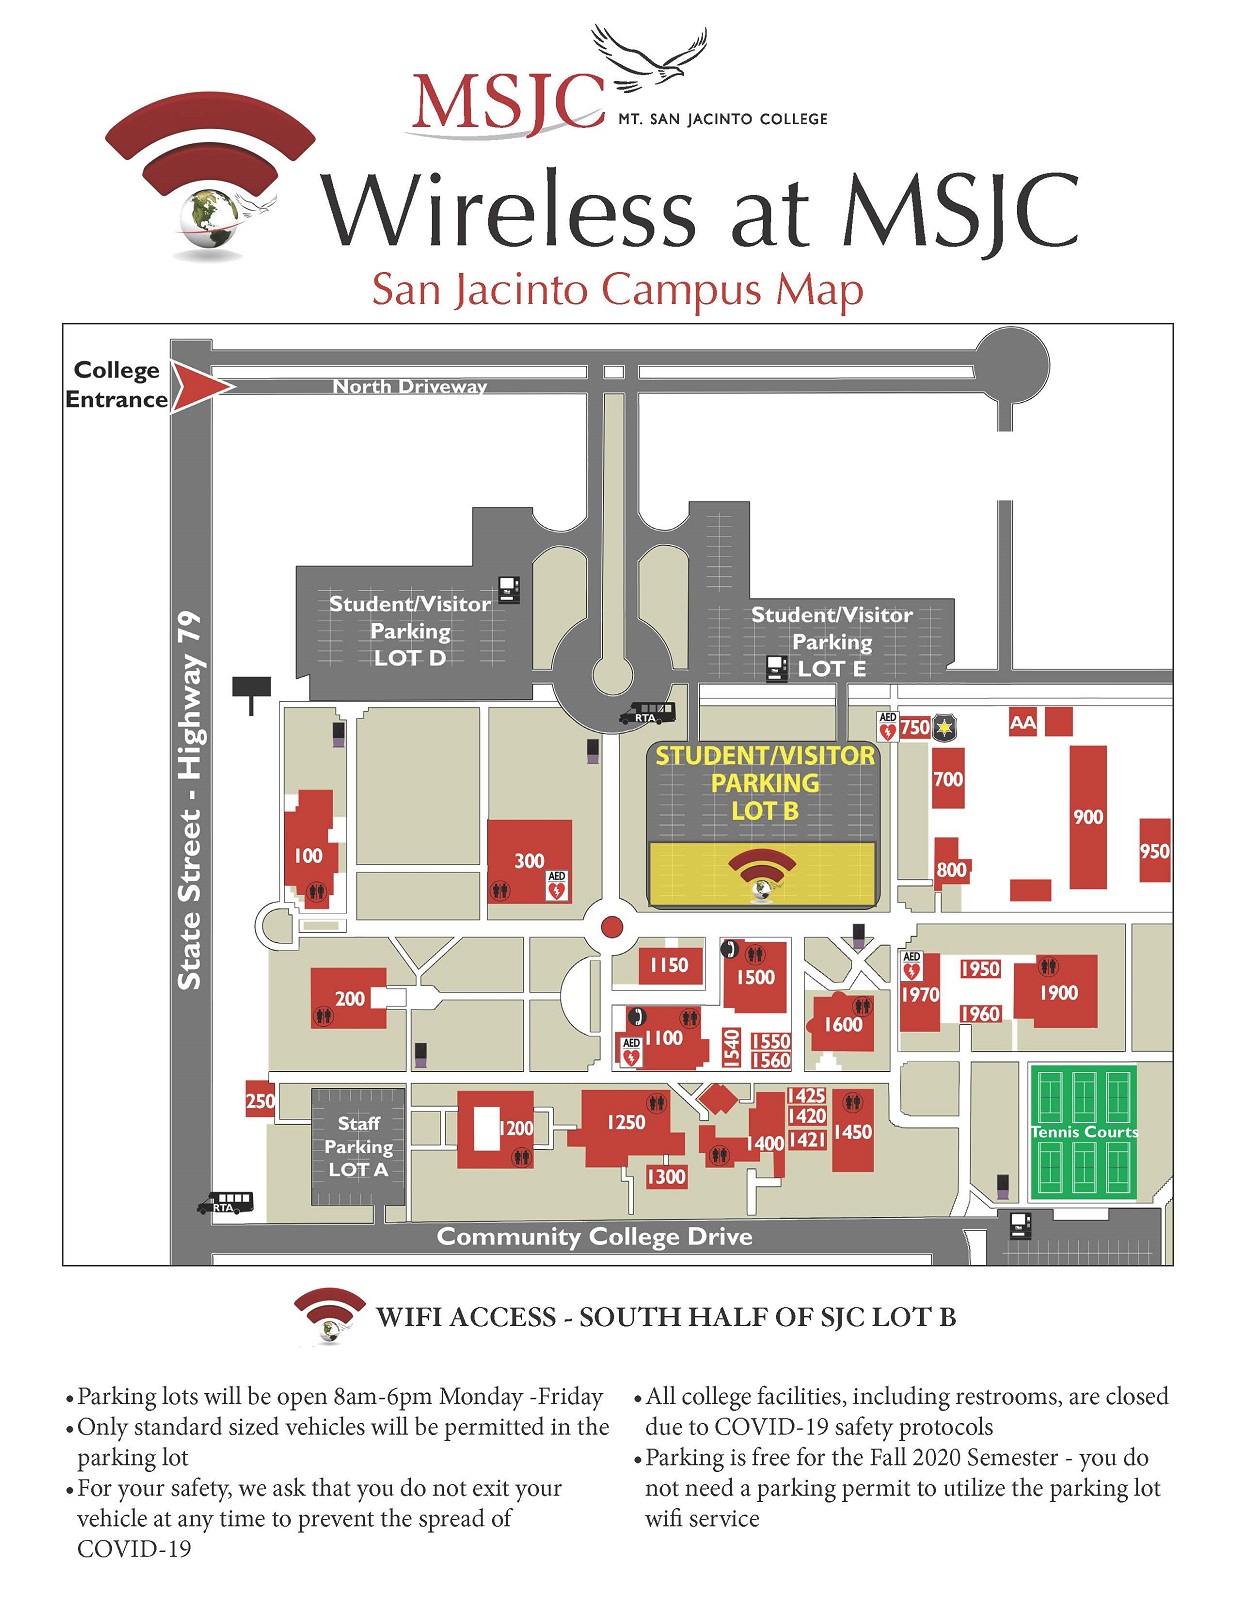 San Jacinto Campus wireless access